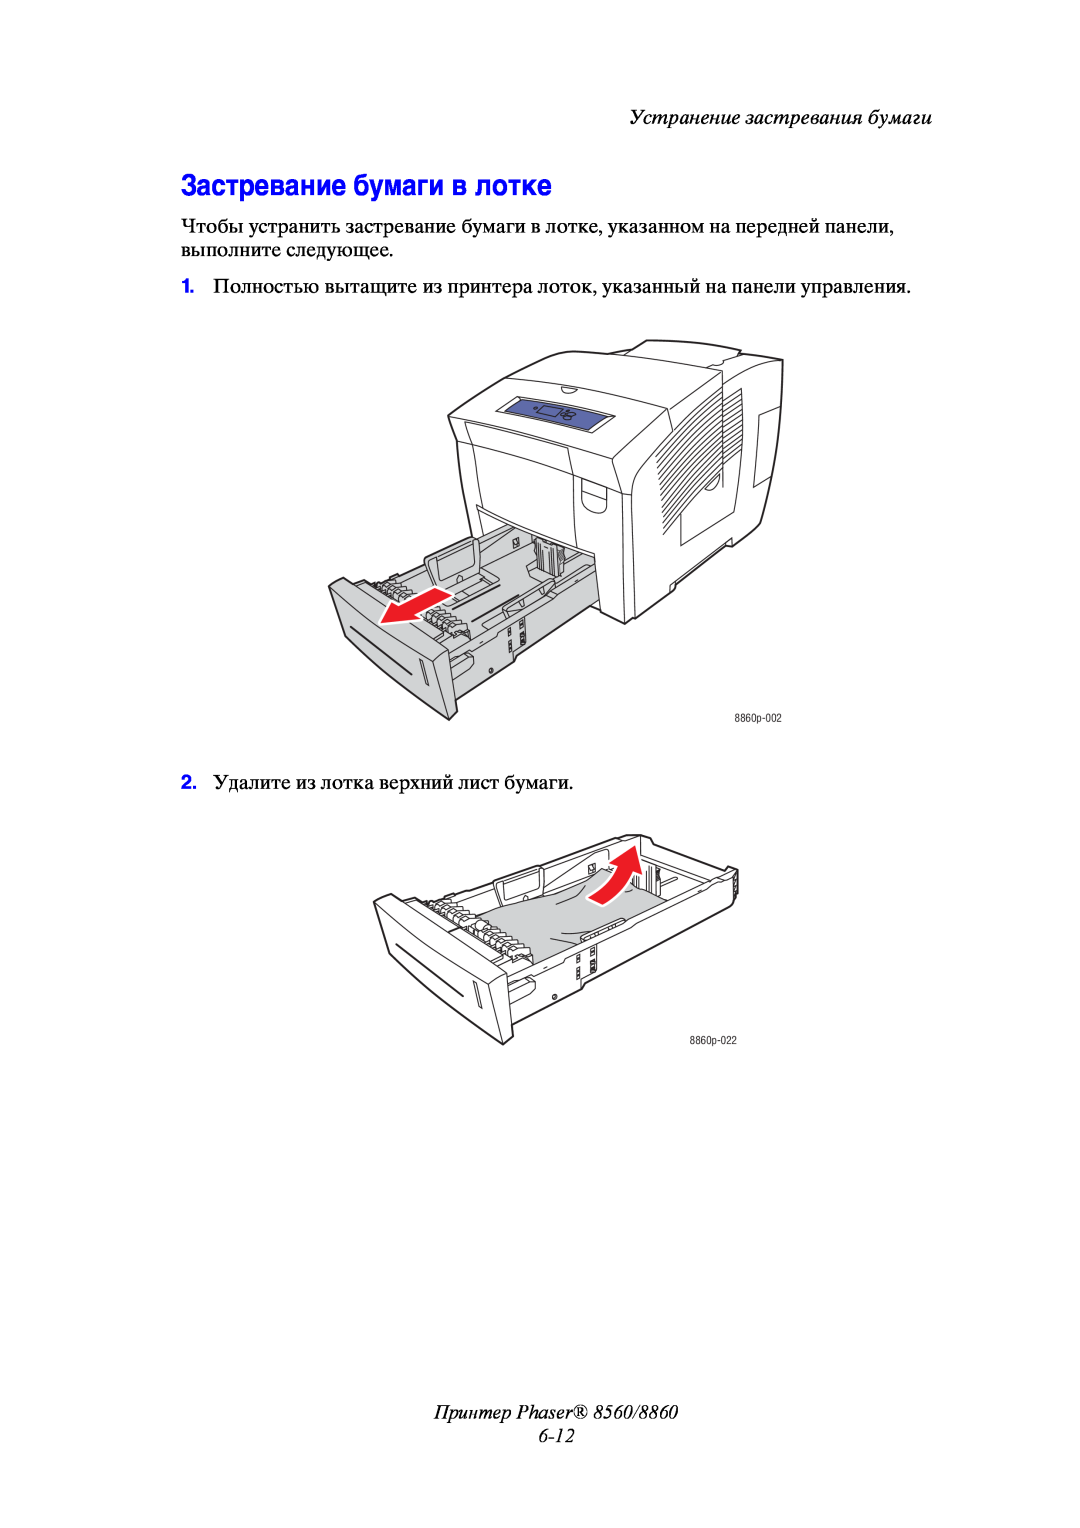 Xerox manual Застревание бумаги в лотке, Принтер Phaser 8560/8860, Устранение застревания бумаги 